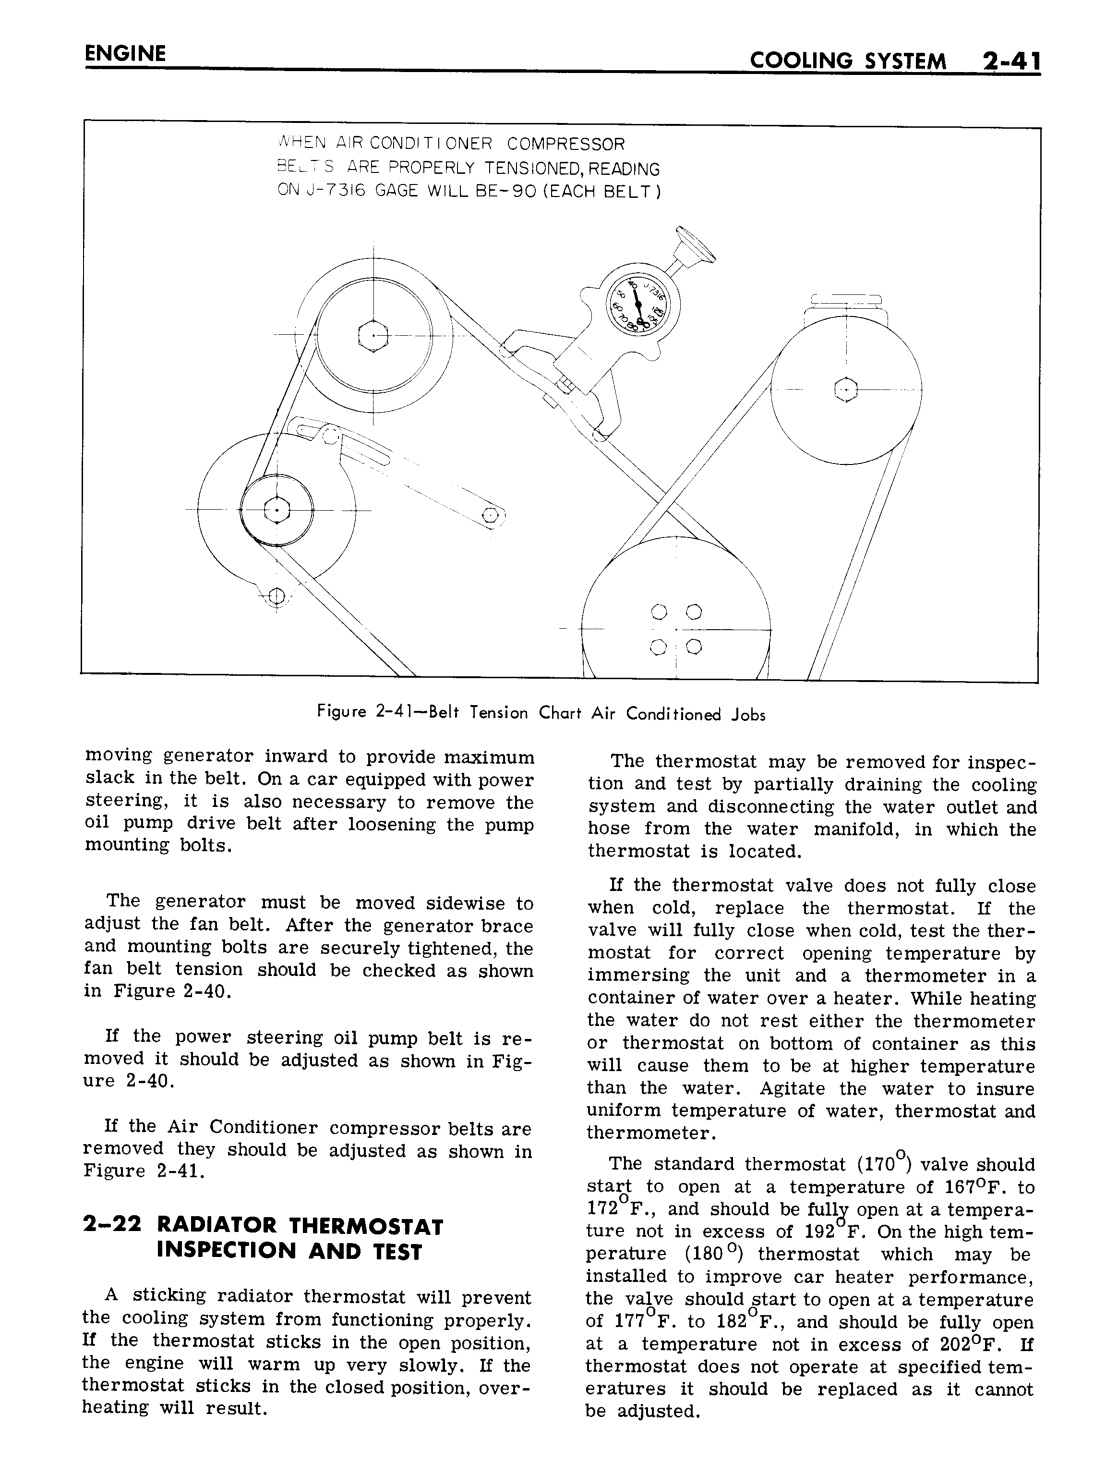 n_03 1961 Buick Shop Manual - Engine-041-041.jpg